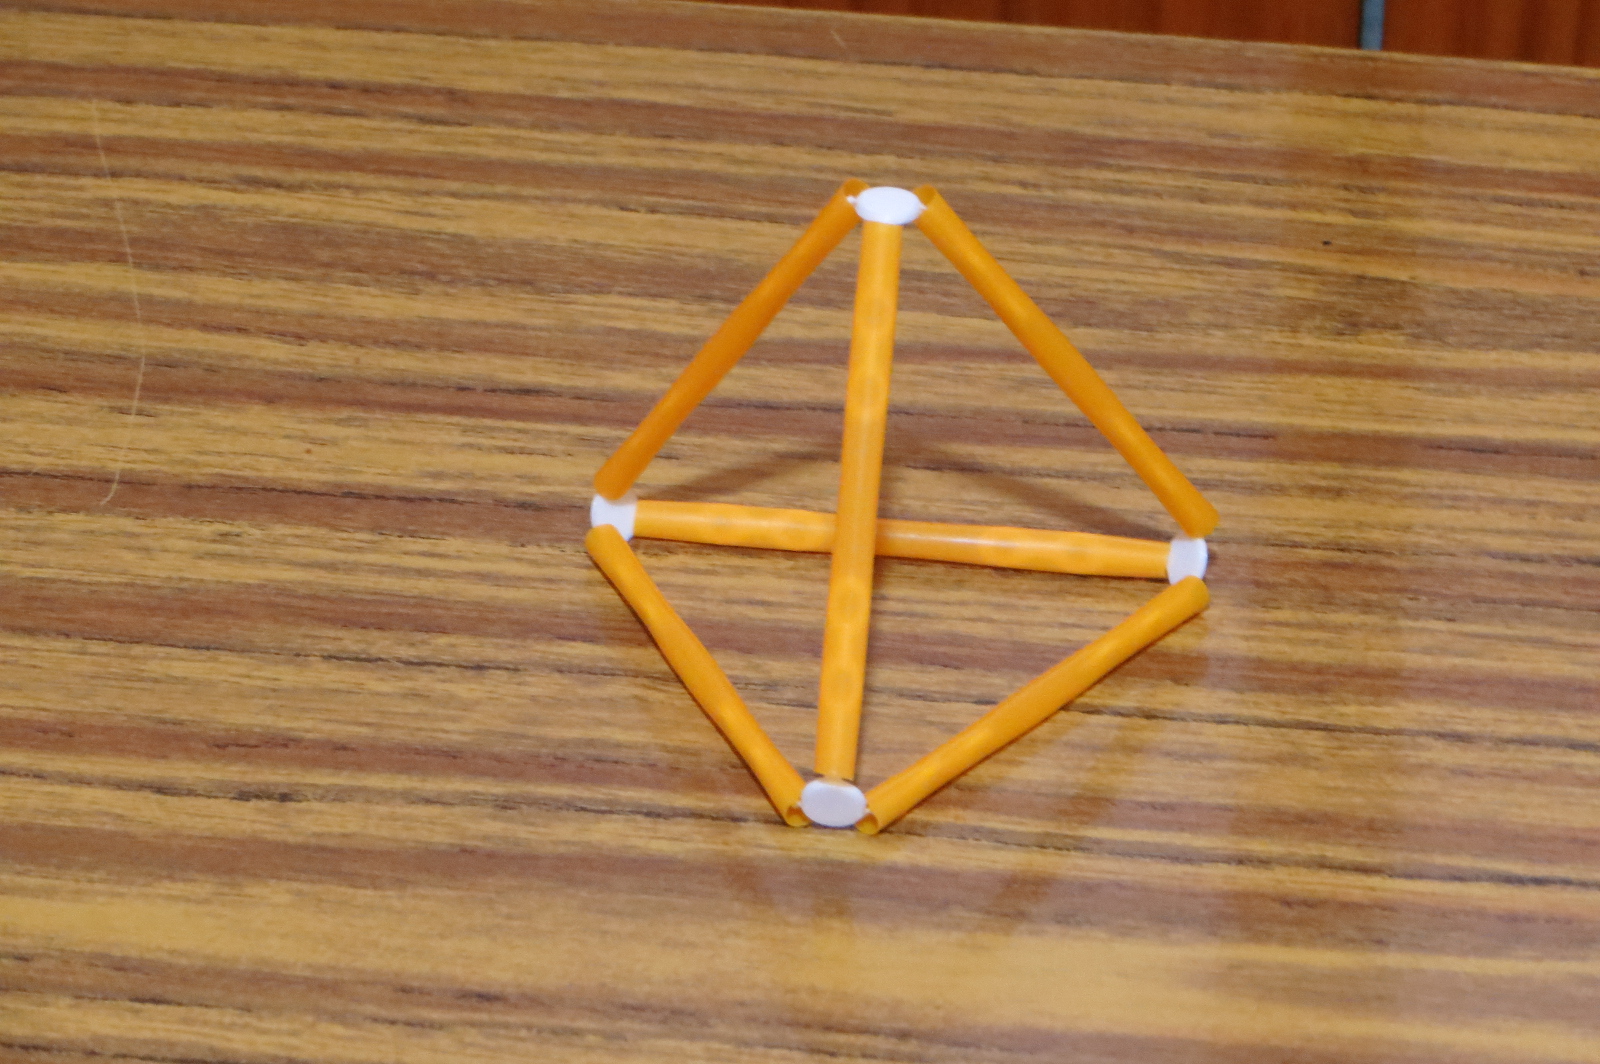 Conectores (o vértices) para montar poliedros con pajitas de beber refrescos